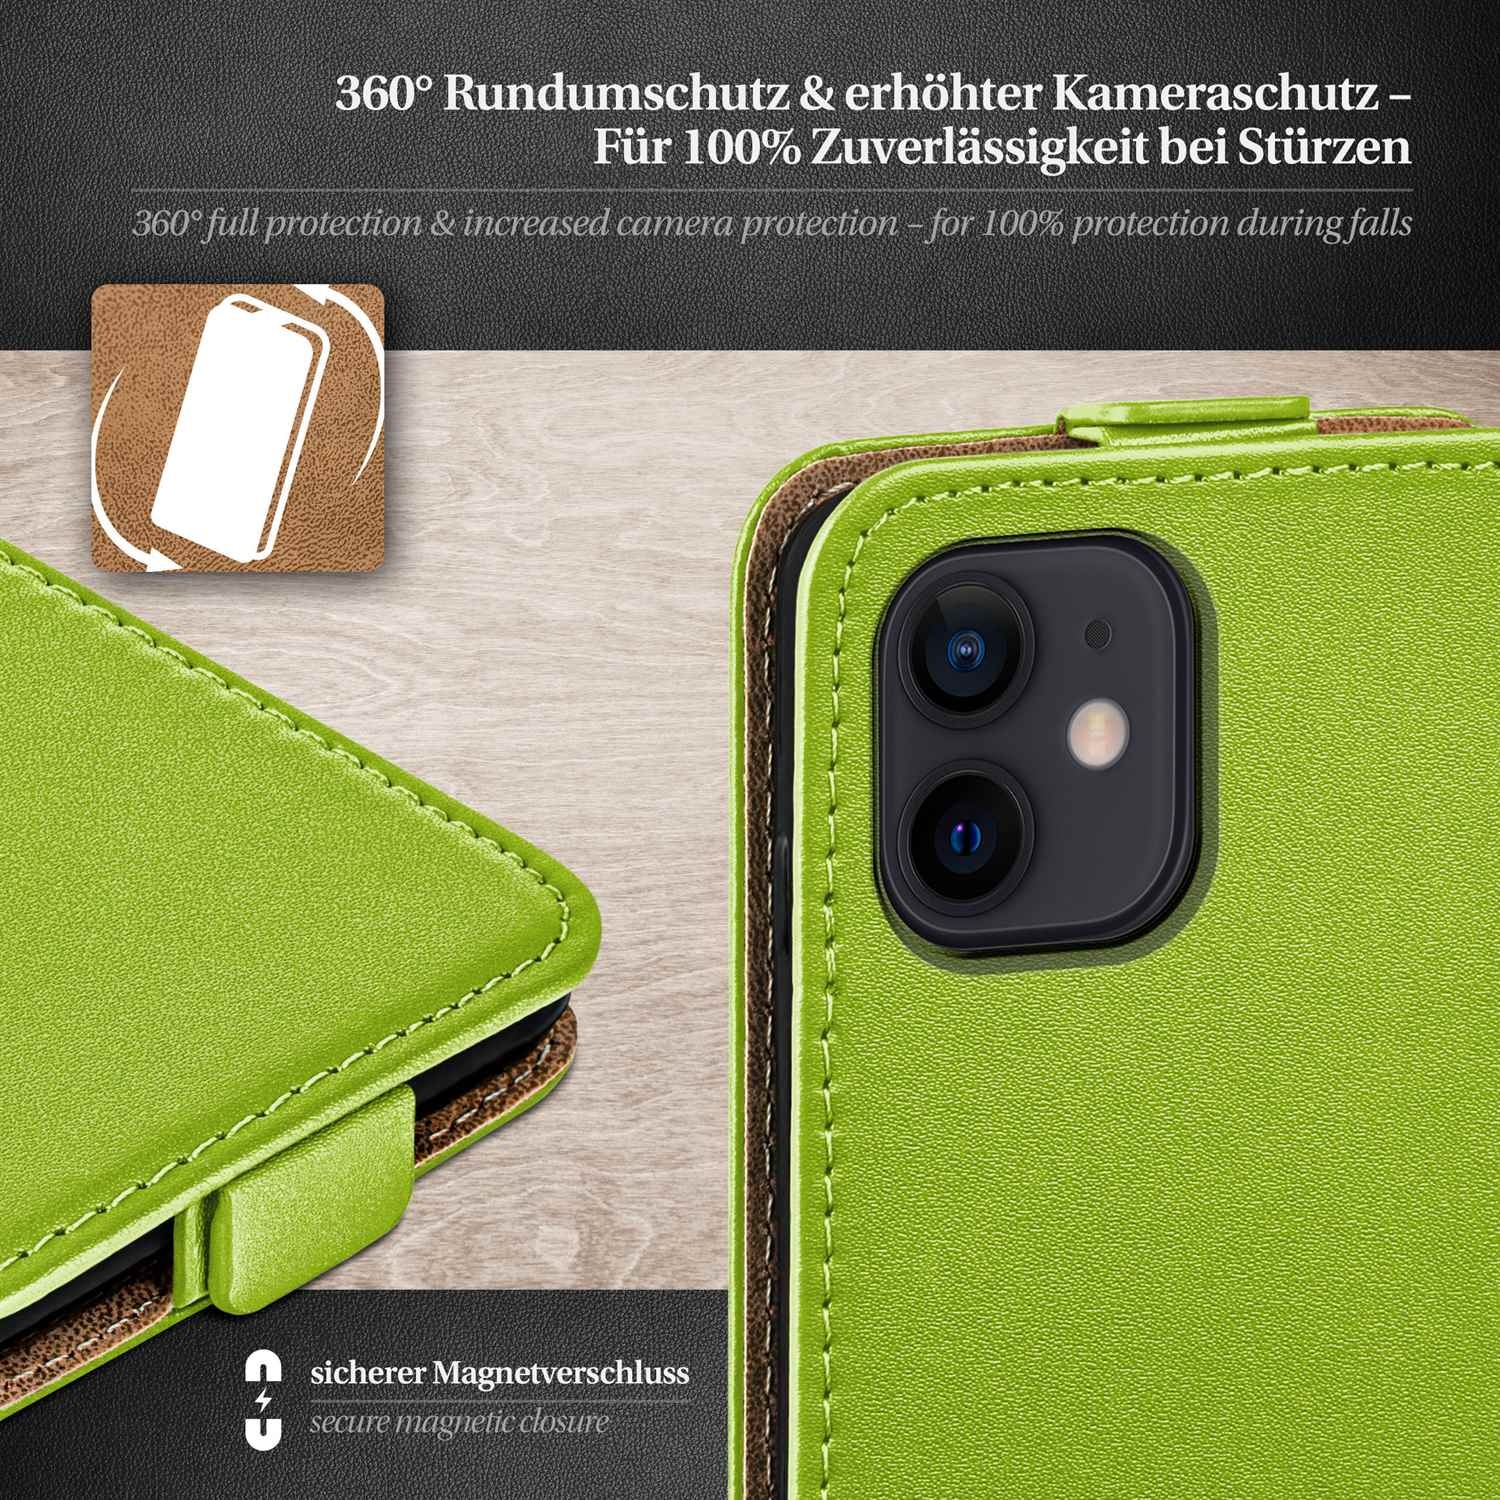 MOEX Flip 12 Flip Lime-Green Cover, mini, Case, iPhone Apple